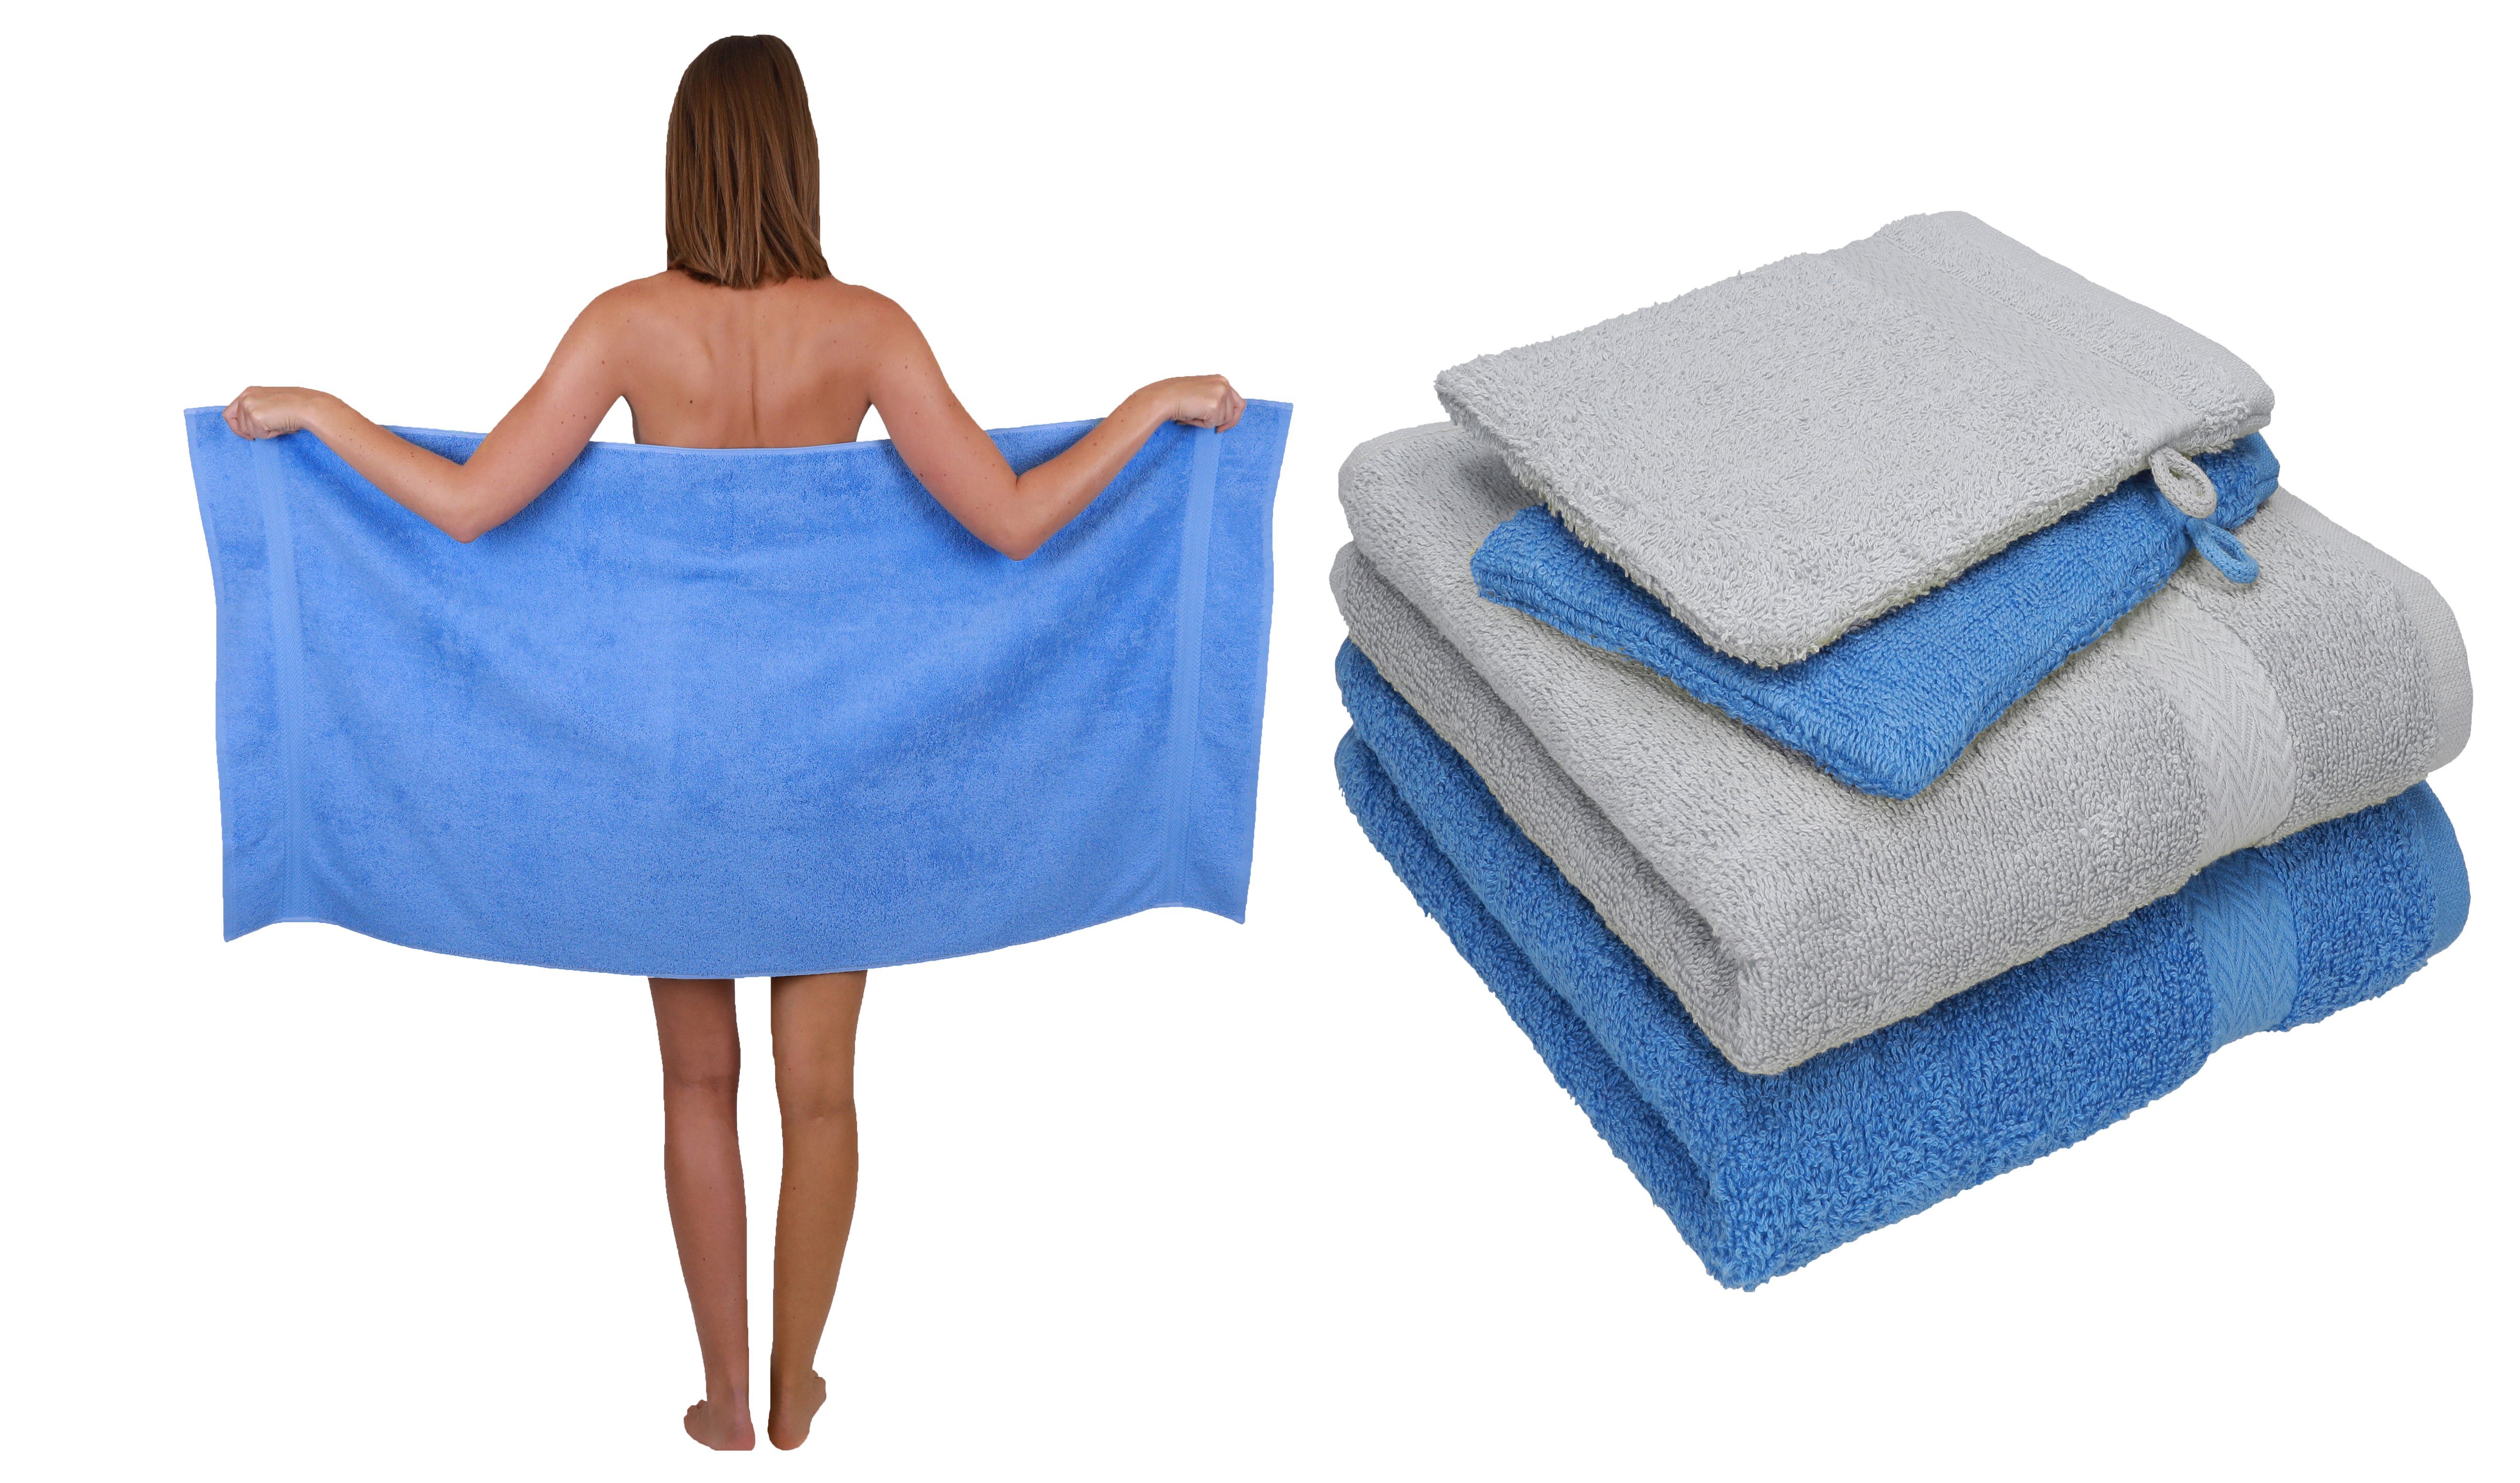 Betz Handtuch Set Baumwolle Pack Handtuch Single 5 2 Baumwolle 100% 100% TLG. 1 2 Handtücher hellblau-silbergrau Set Waschhandschuhe, Duschtuch